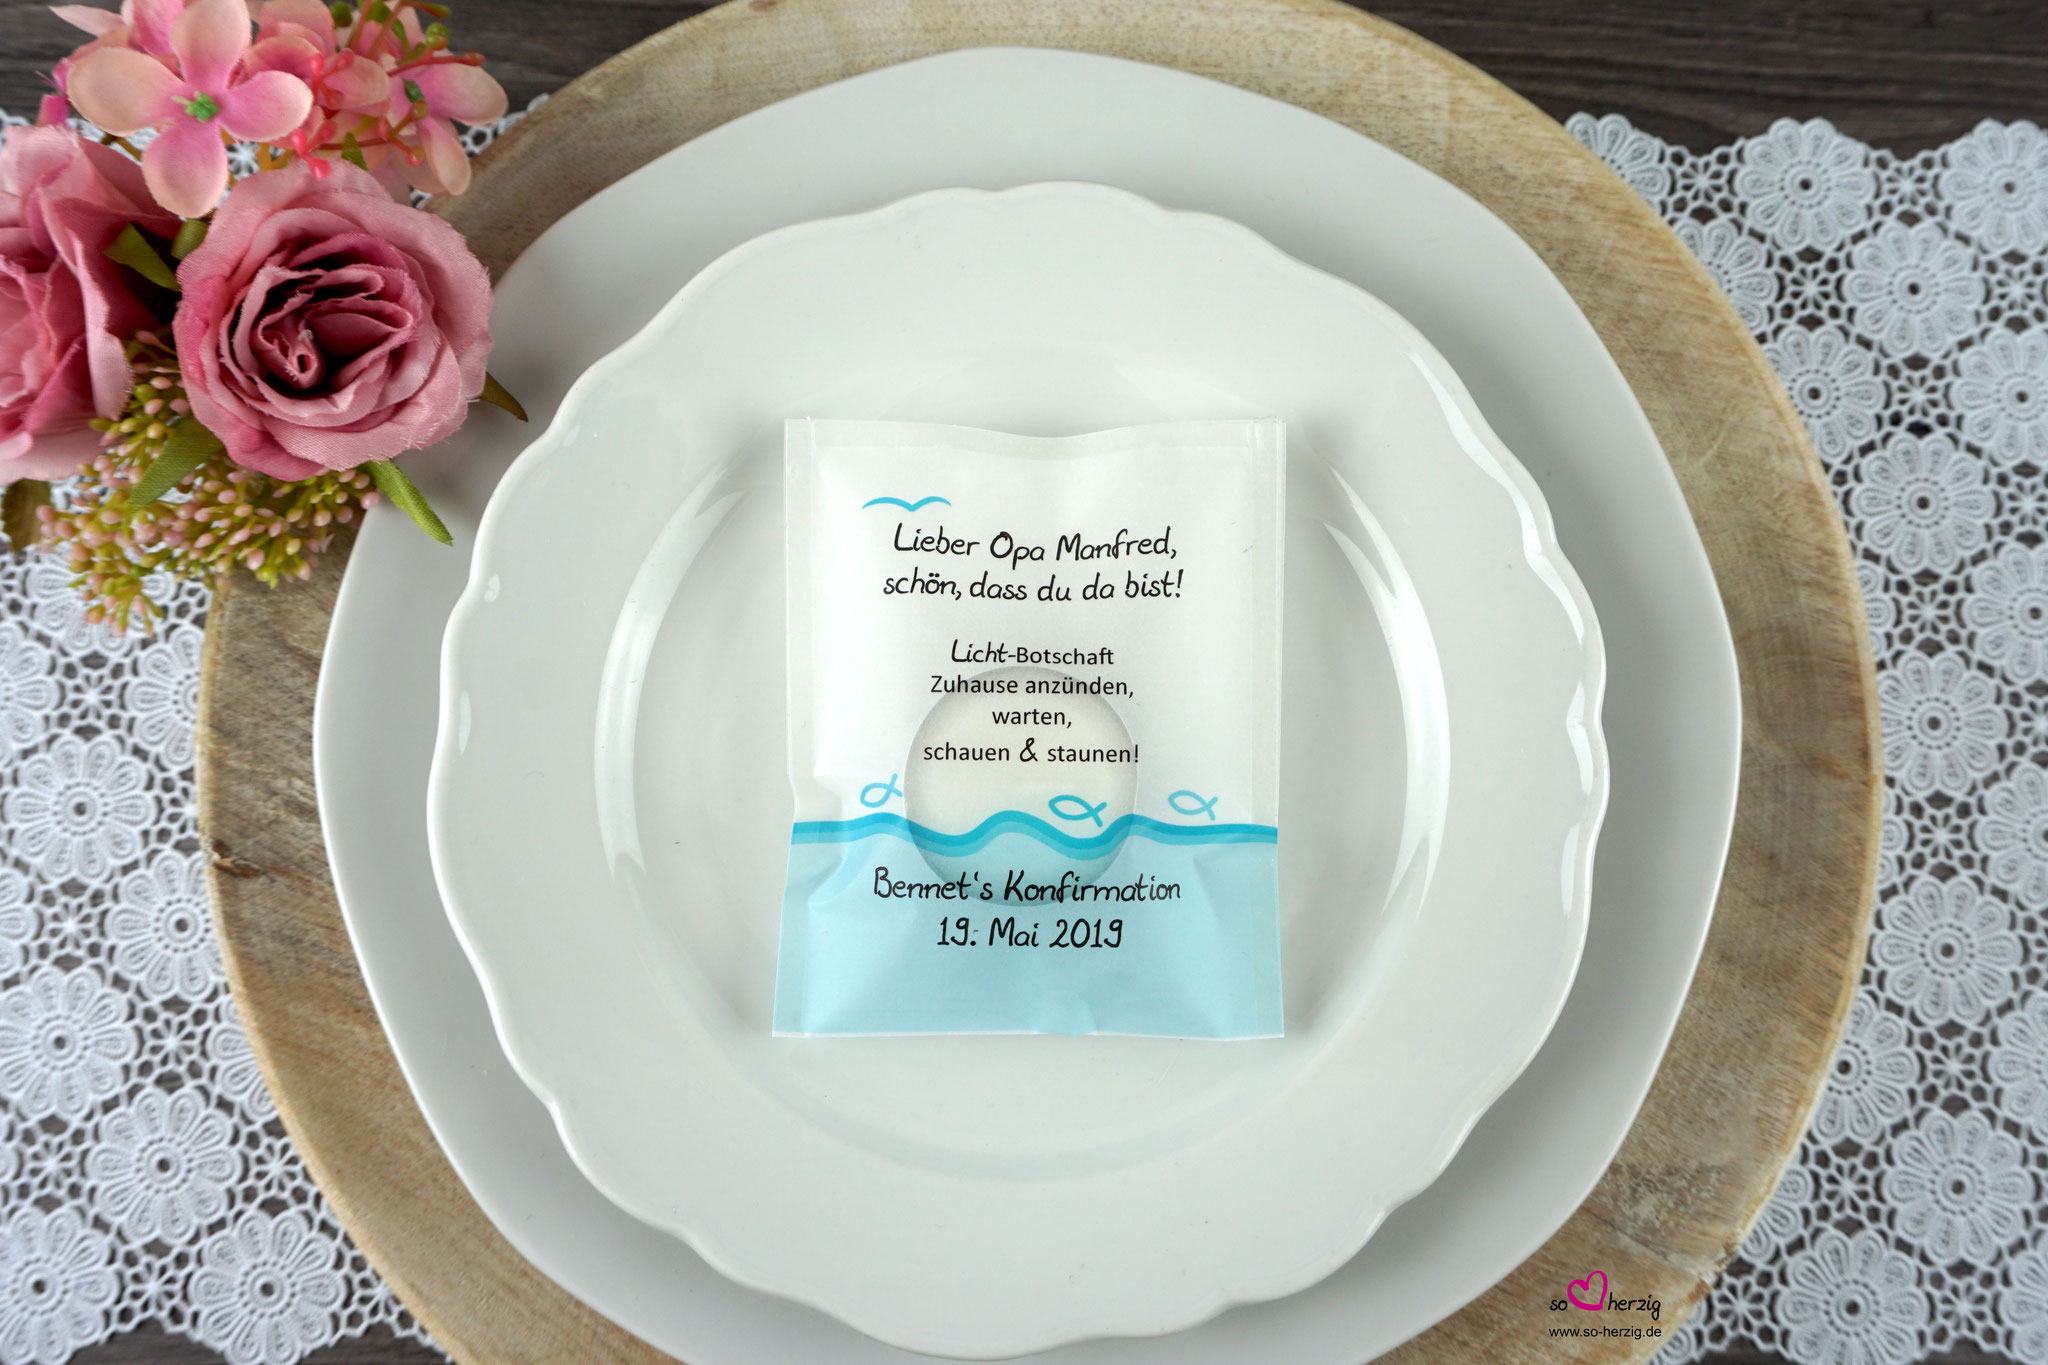 Teelicht-Botschaft  "Verpackung als Platzkarte", Design "Fisch Silhouette" Aqua